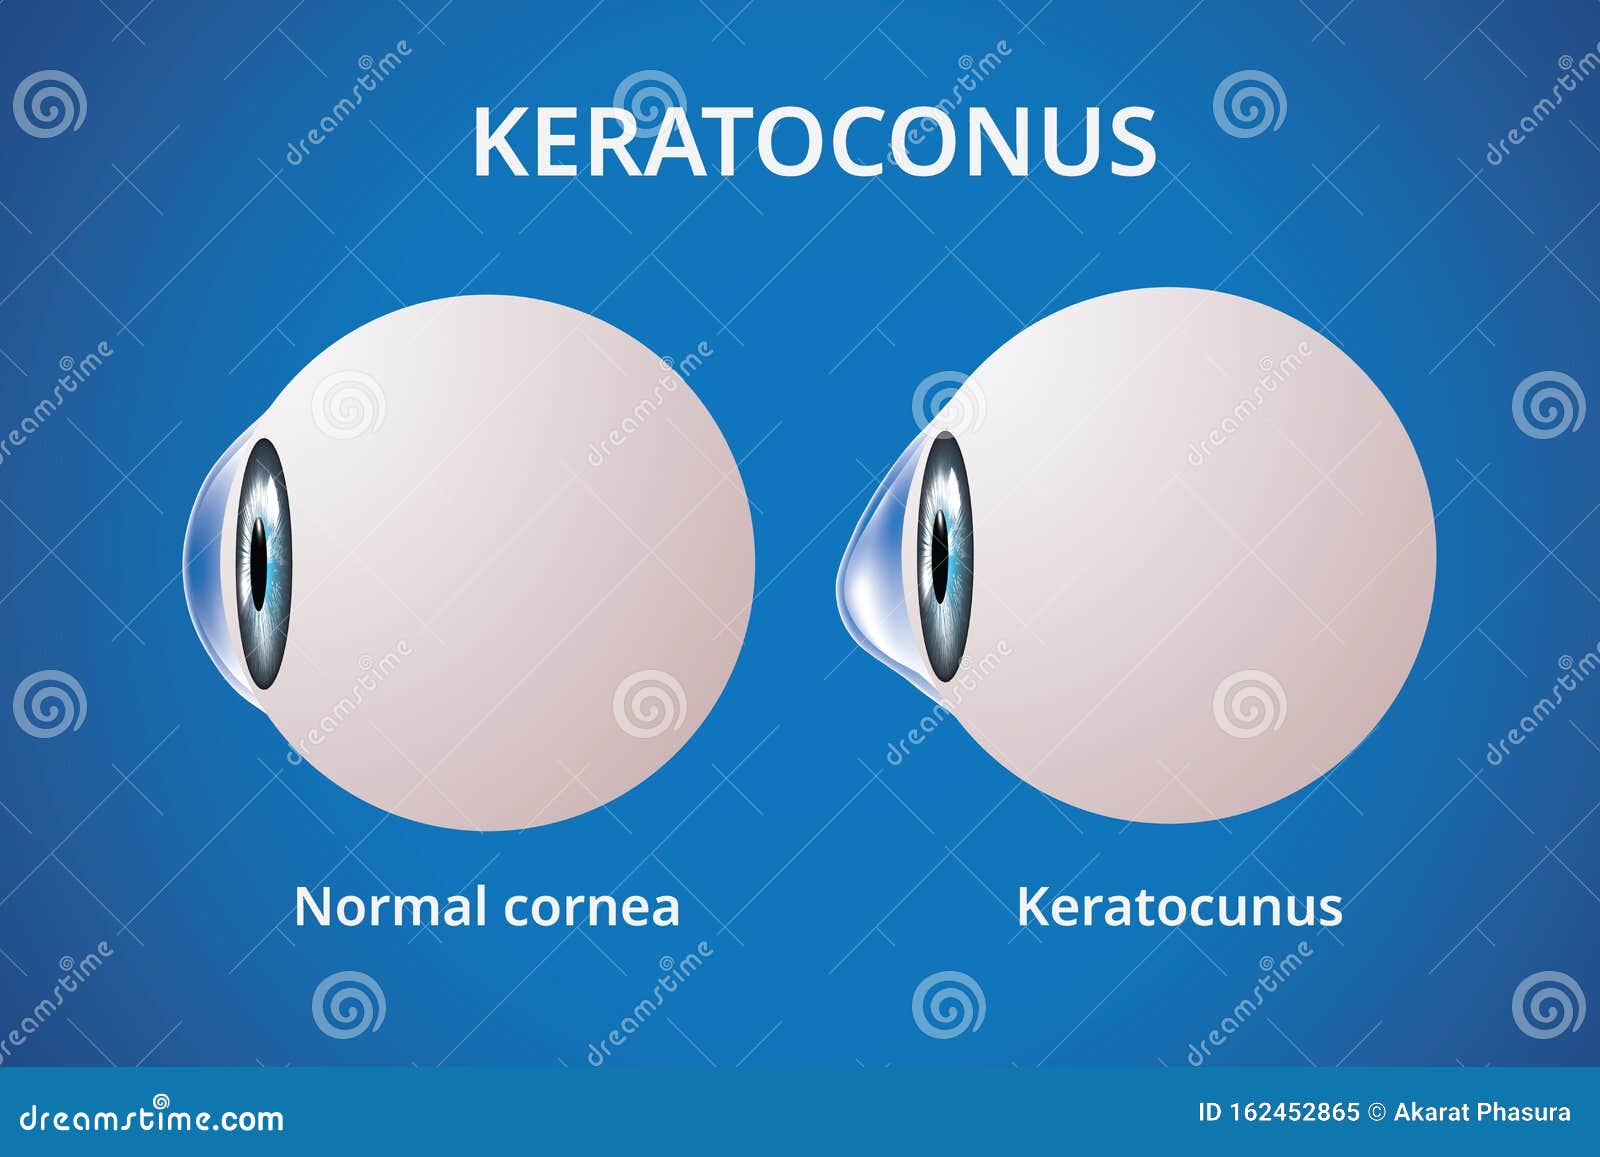 eye cornea and keratoconus, eye disorder, medical 